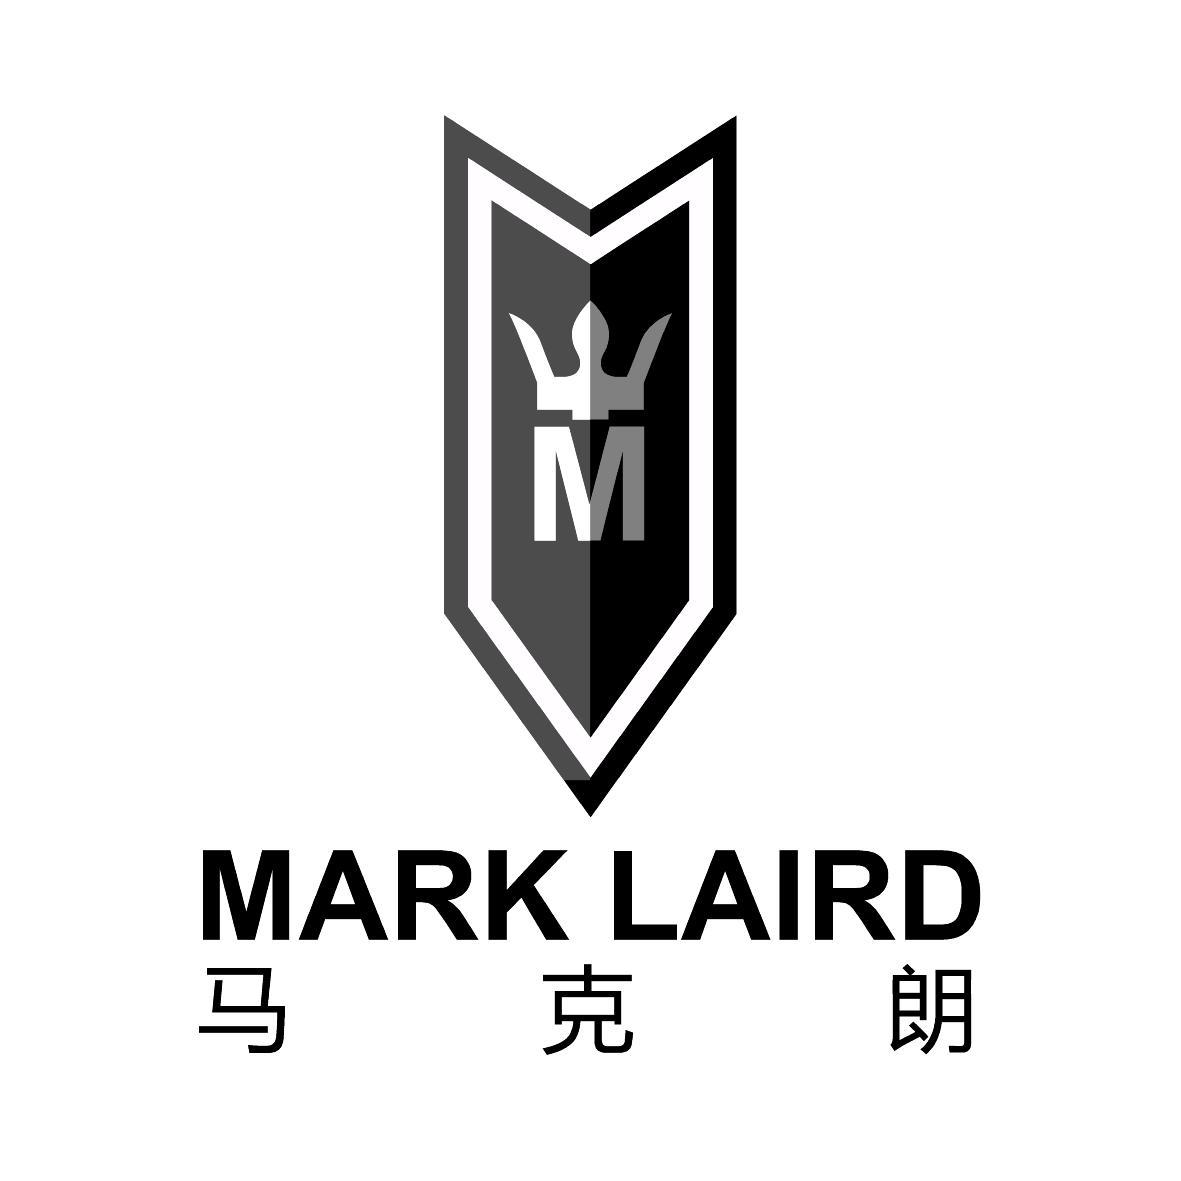  MARK LAIRD M